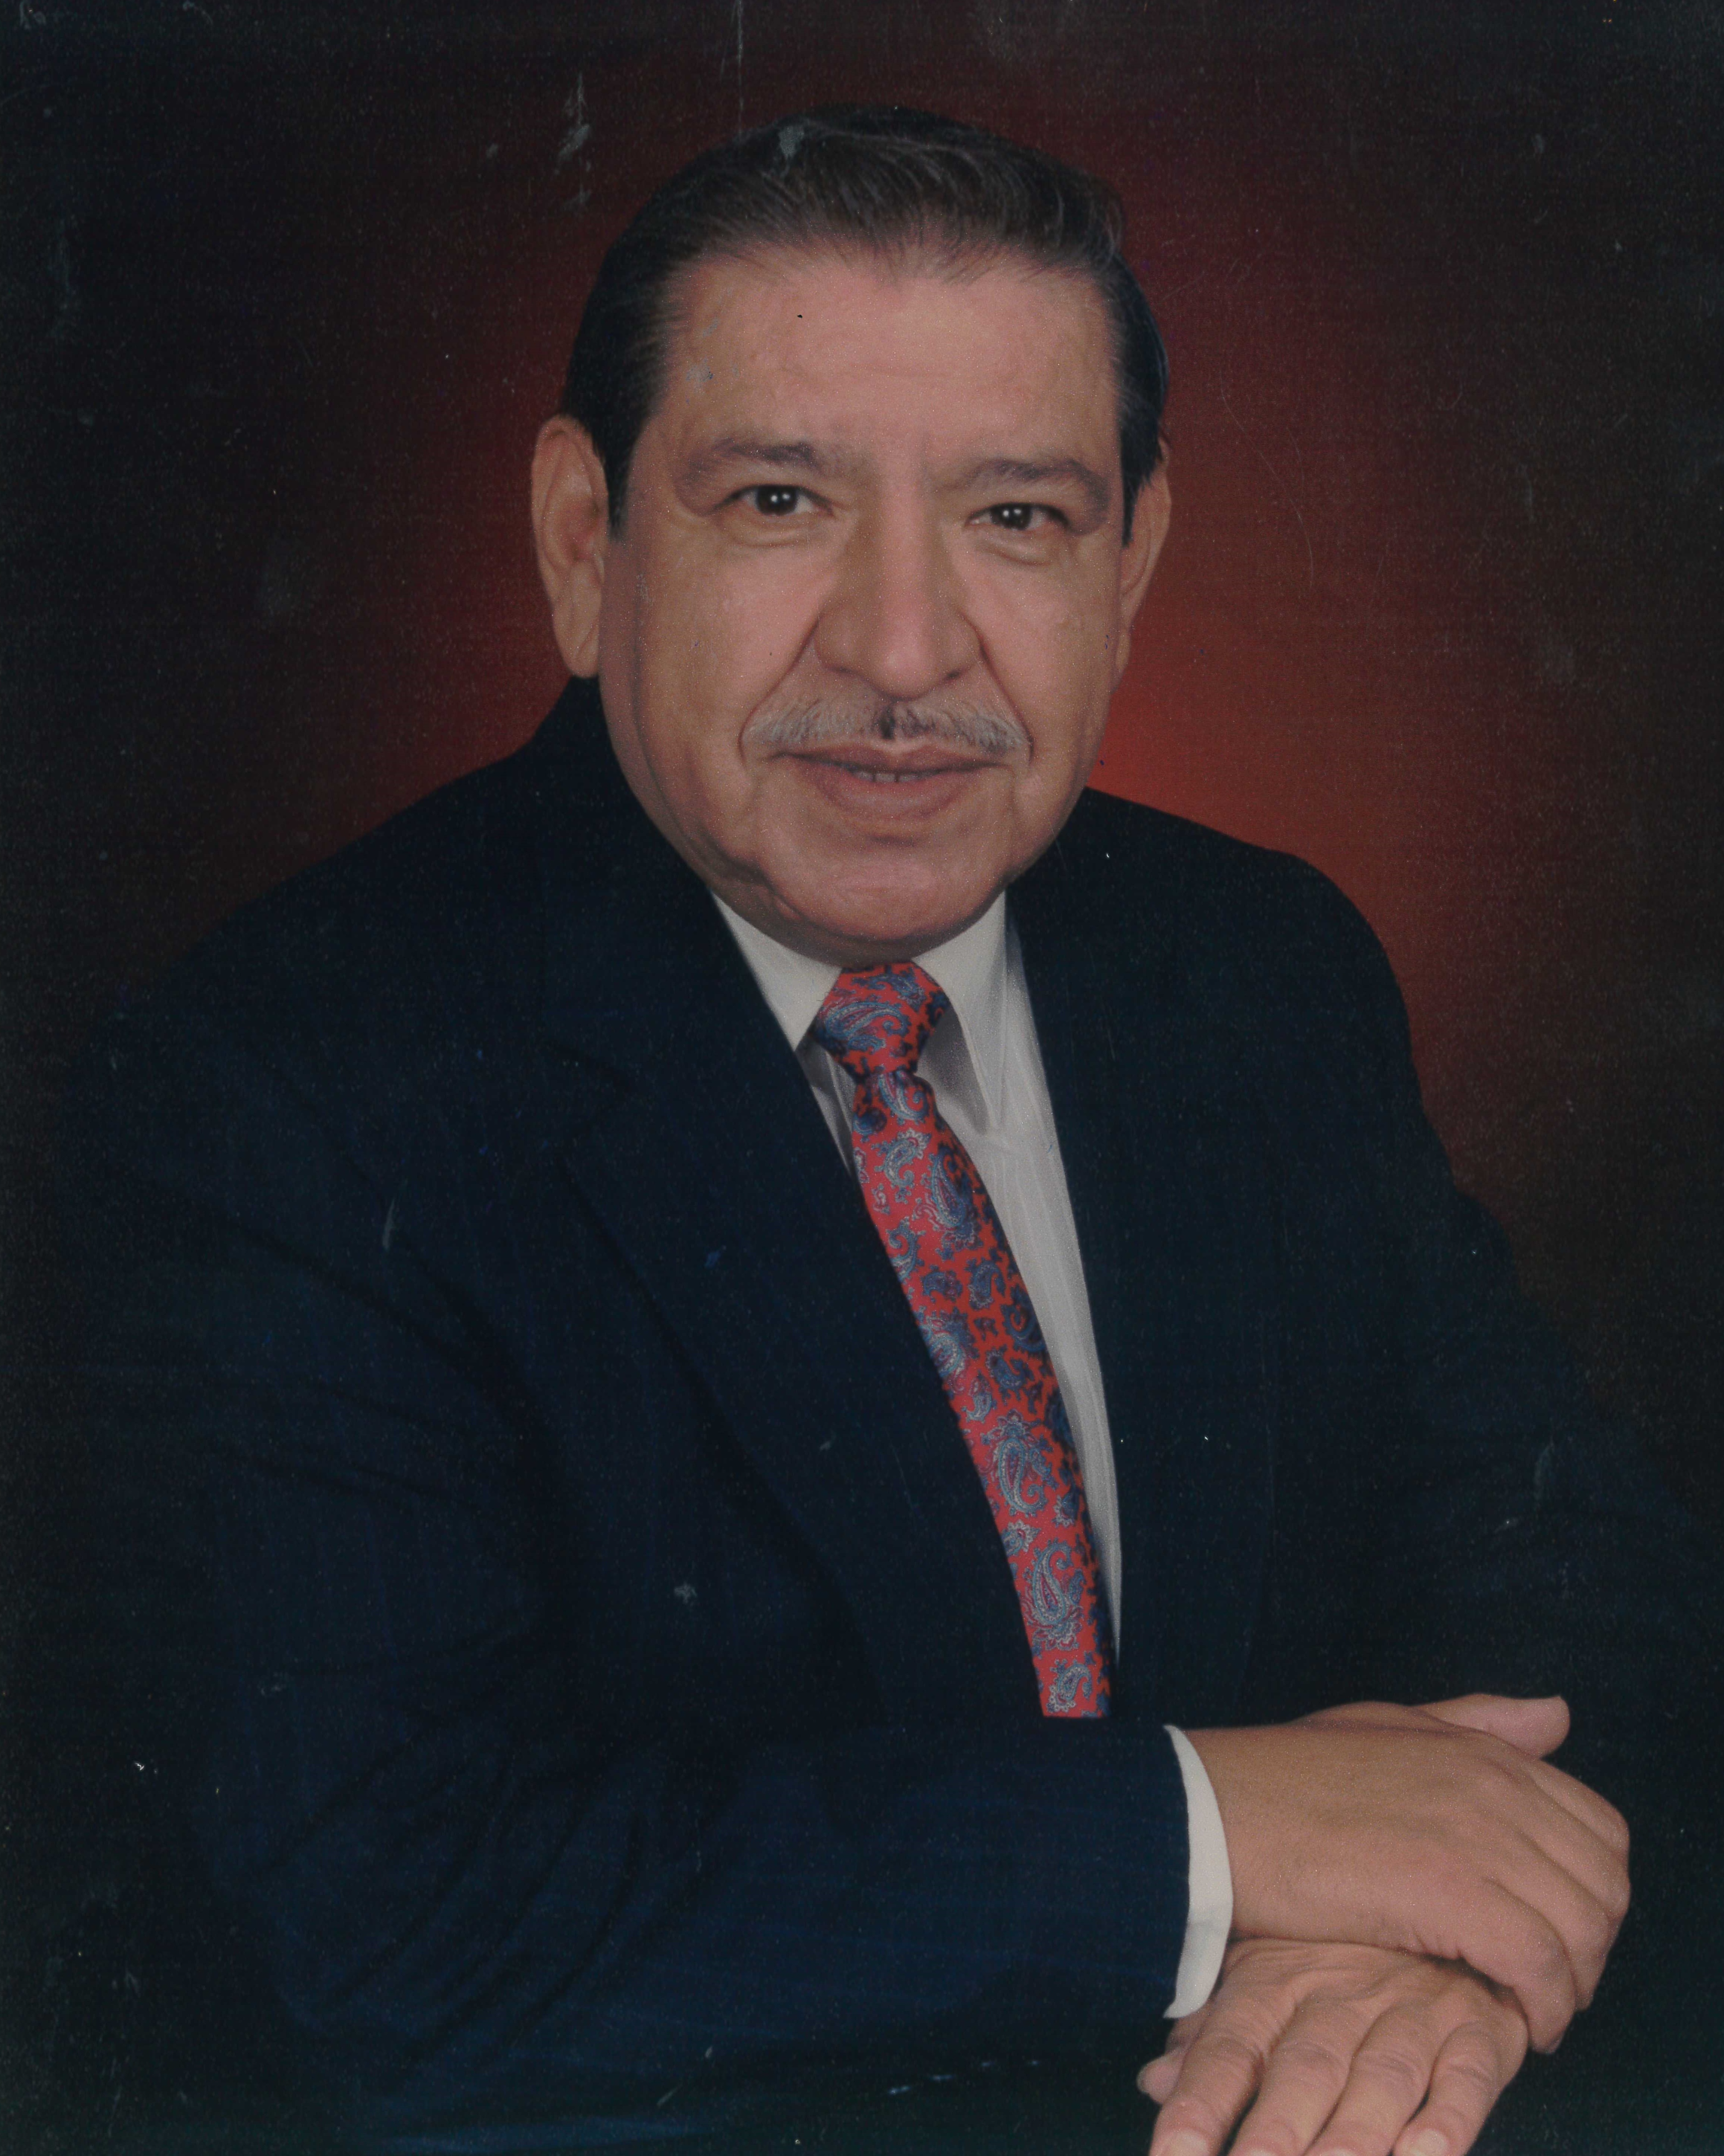 Gilberto Garza